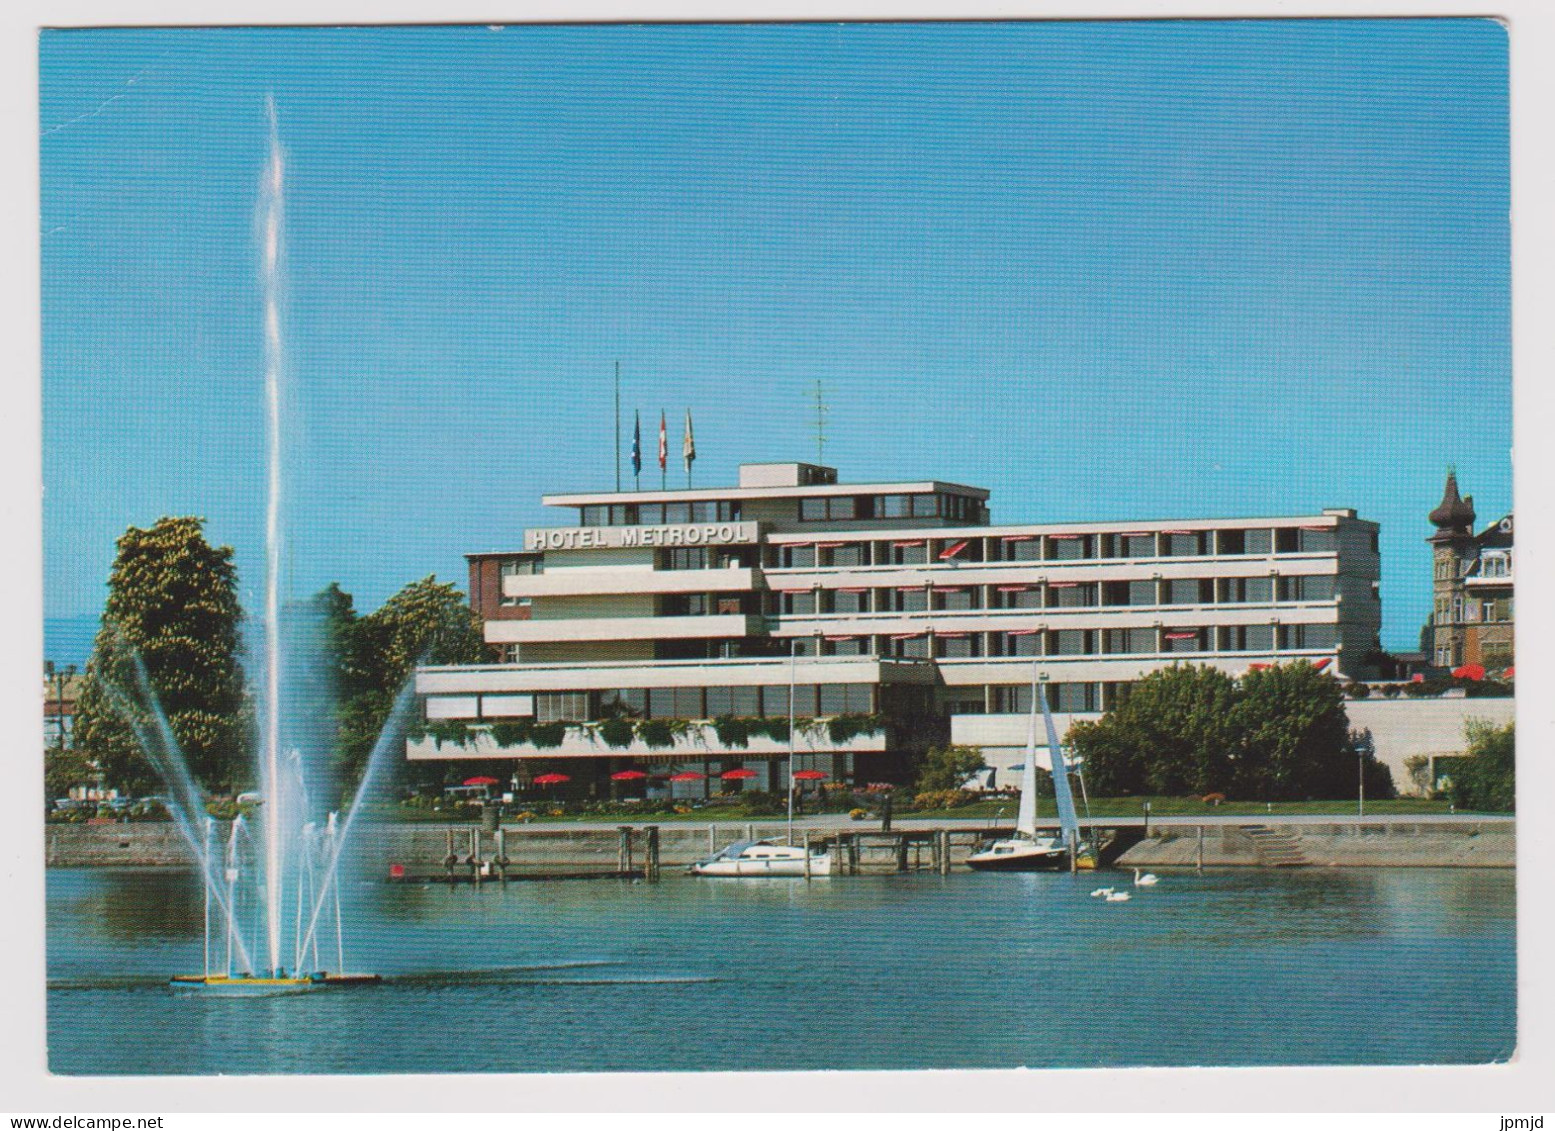 ARBON Am Bodensee - HOTEL METROPOL - Verlag FOTO GROSS Nr. 36255fb - Arbon